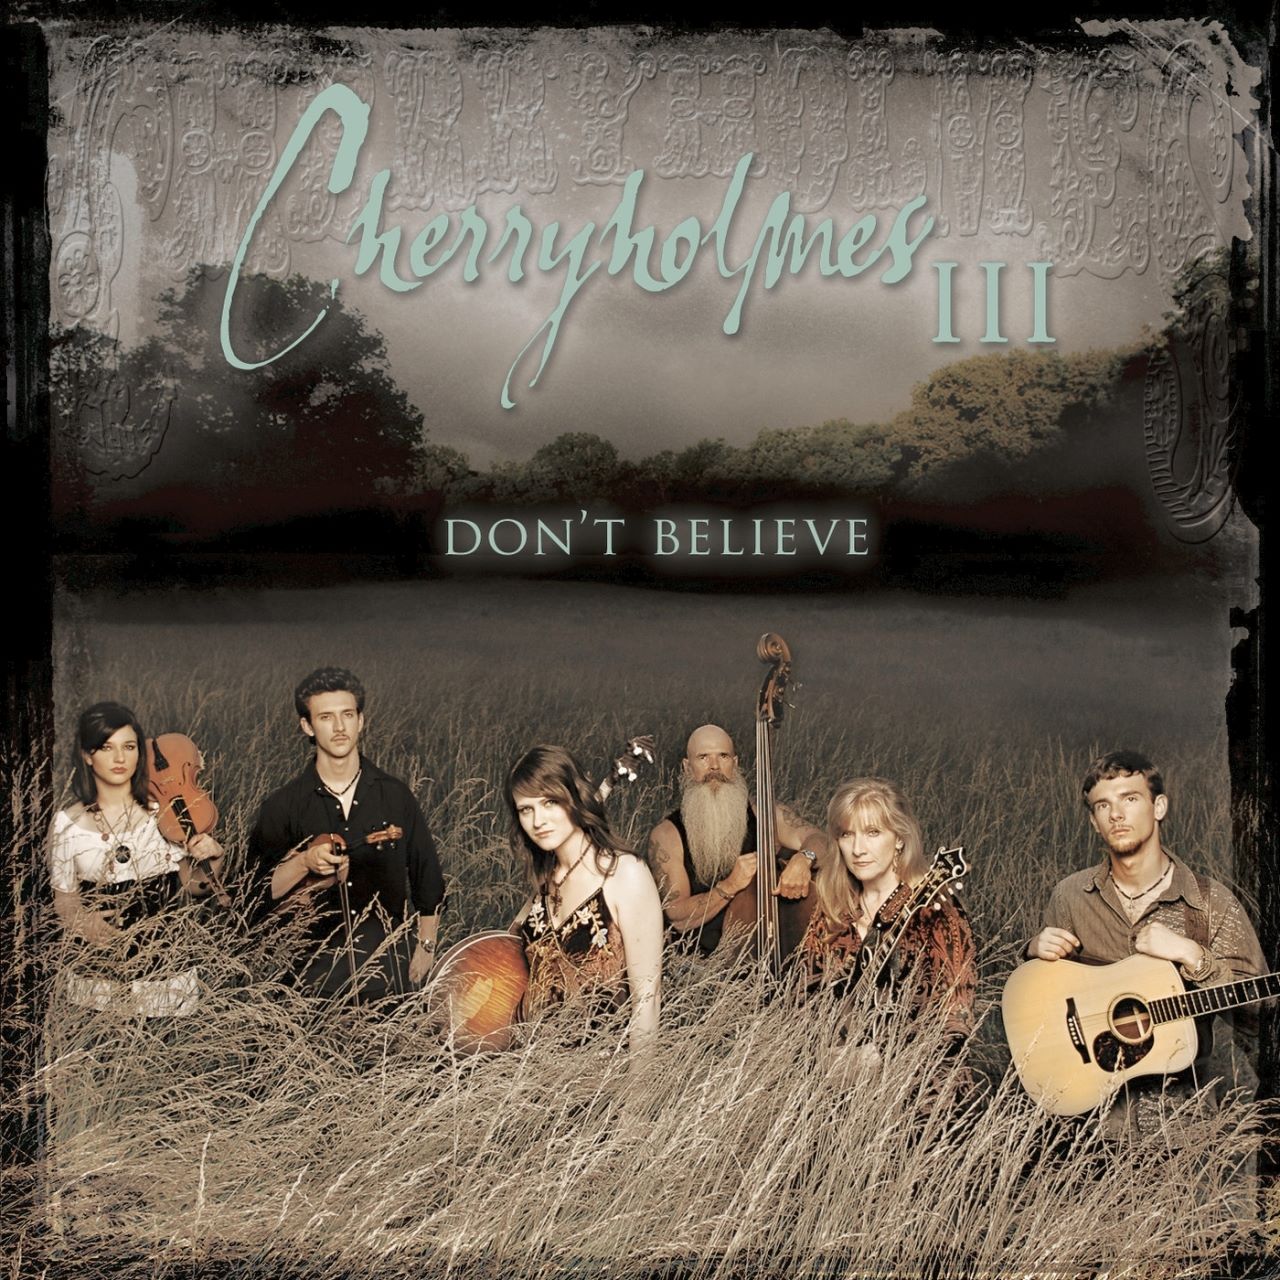 Cherryholmes - Don’t Believe cover album